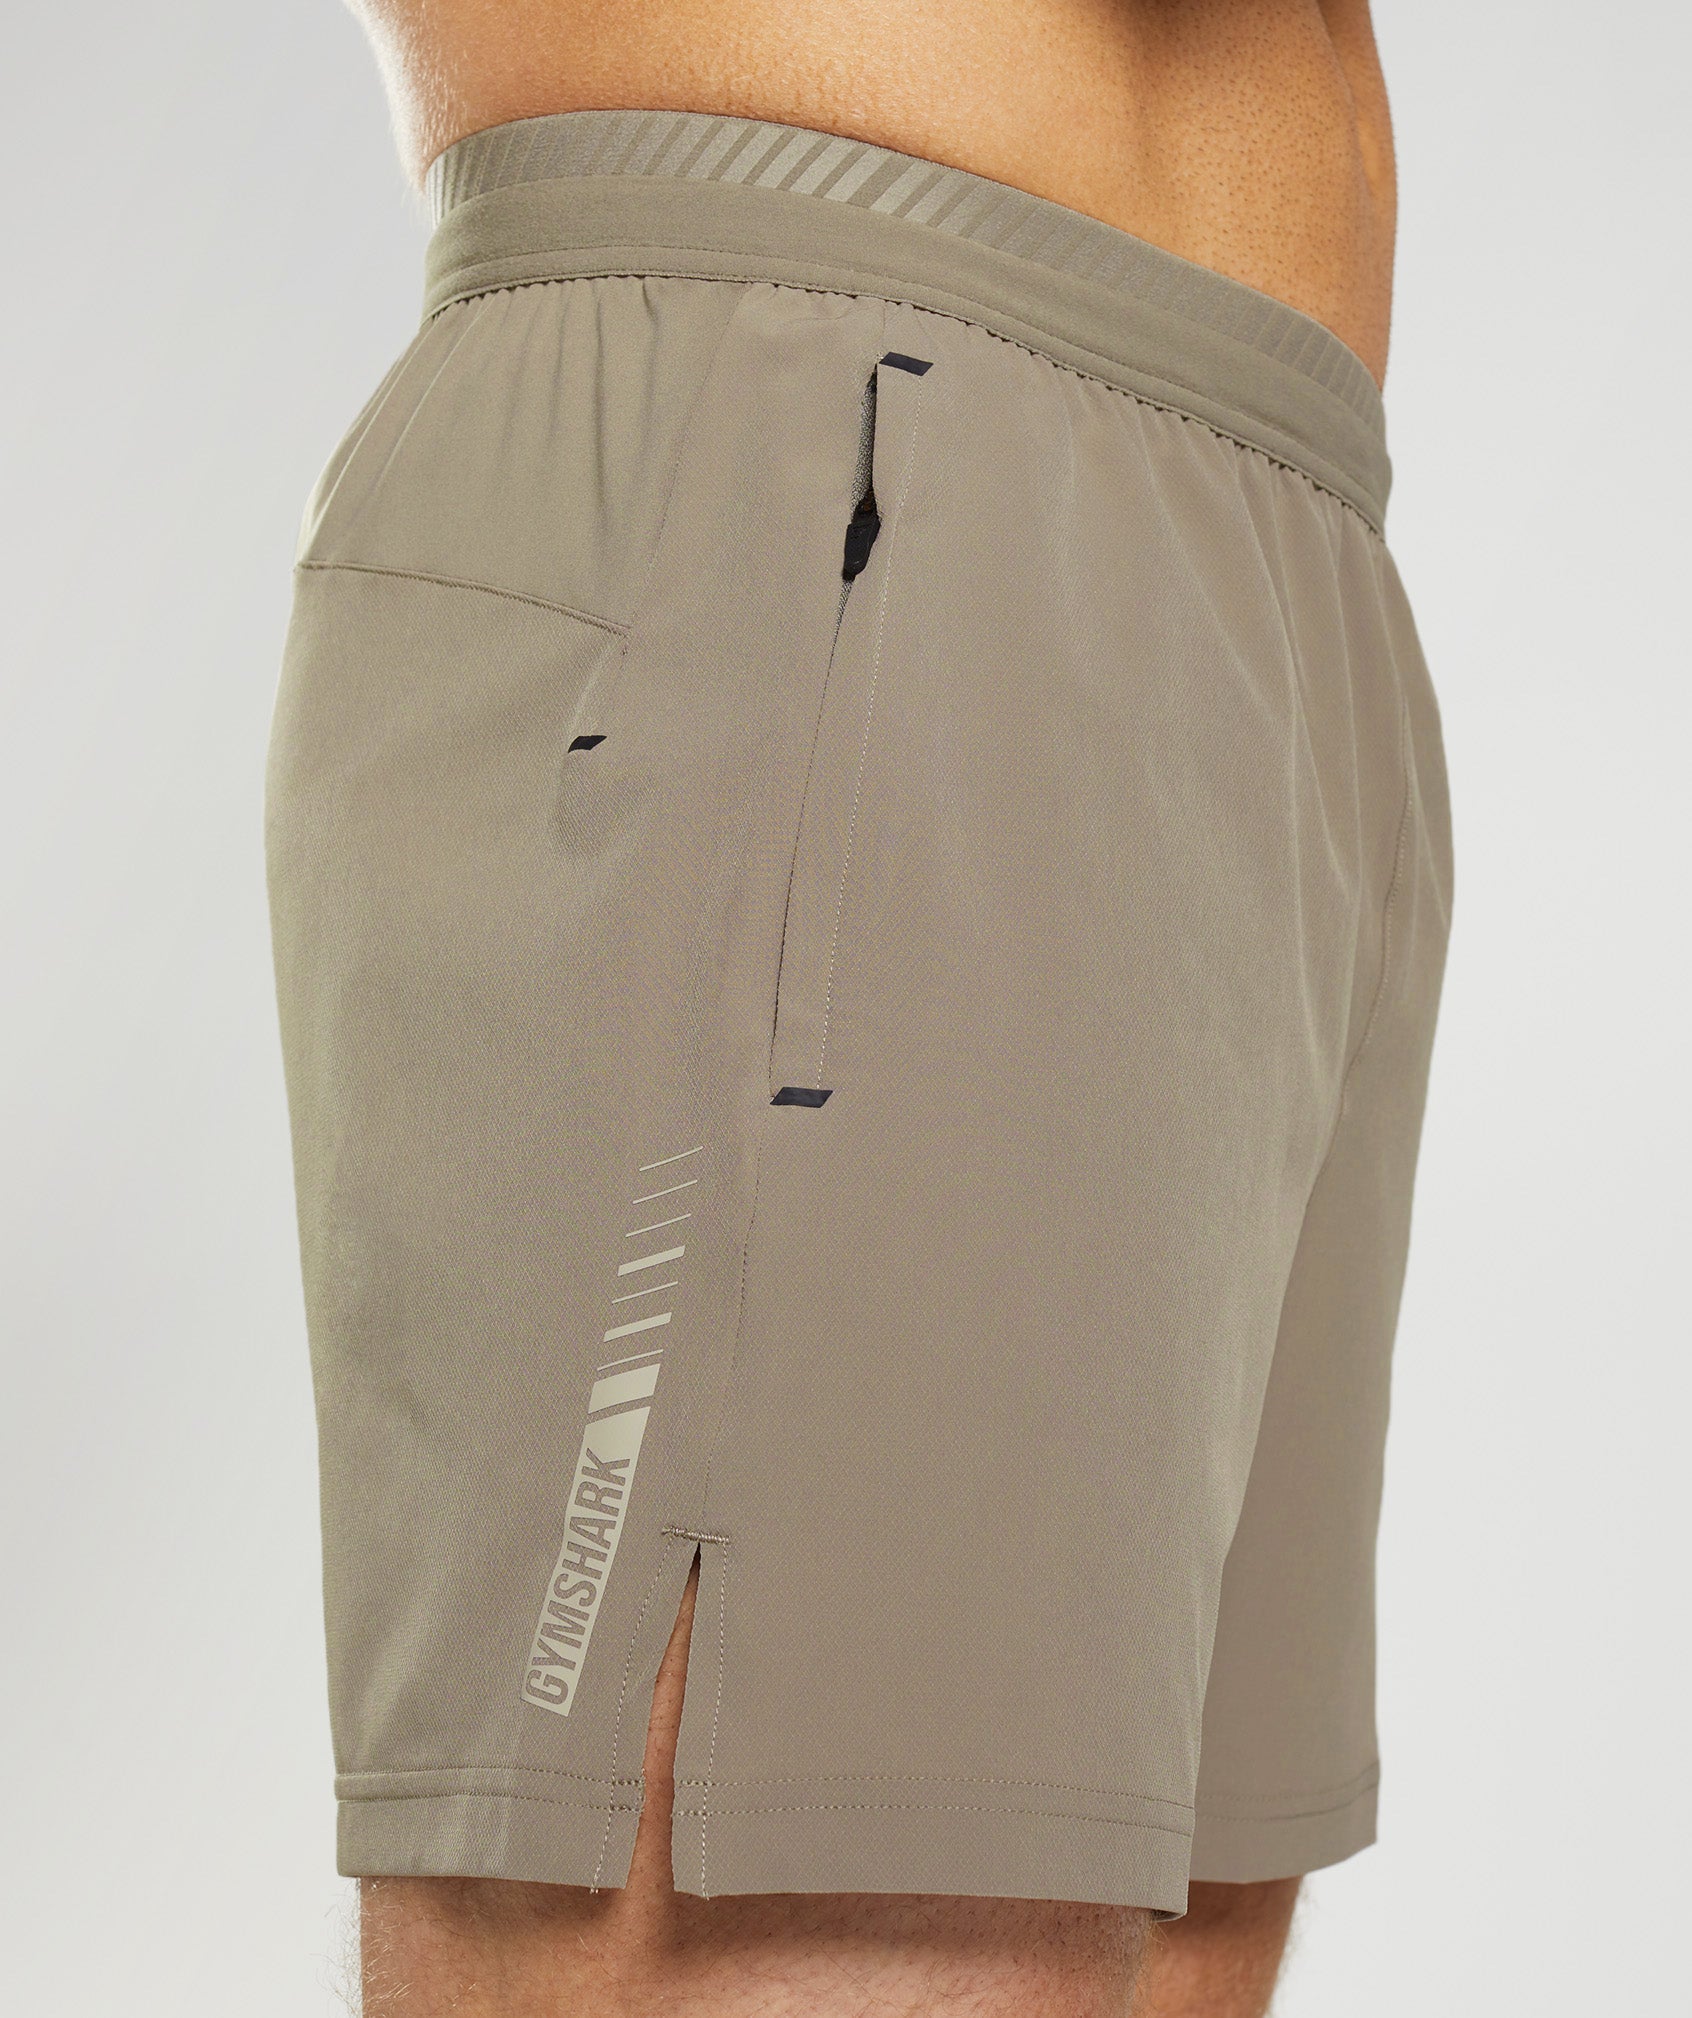 Gymshark Apex 5 Hybrid Shorts - Earthy Brown